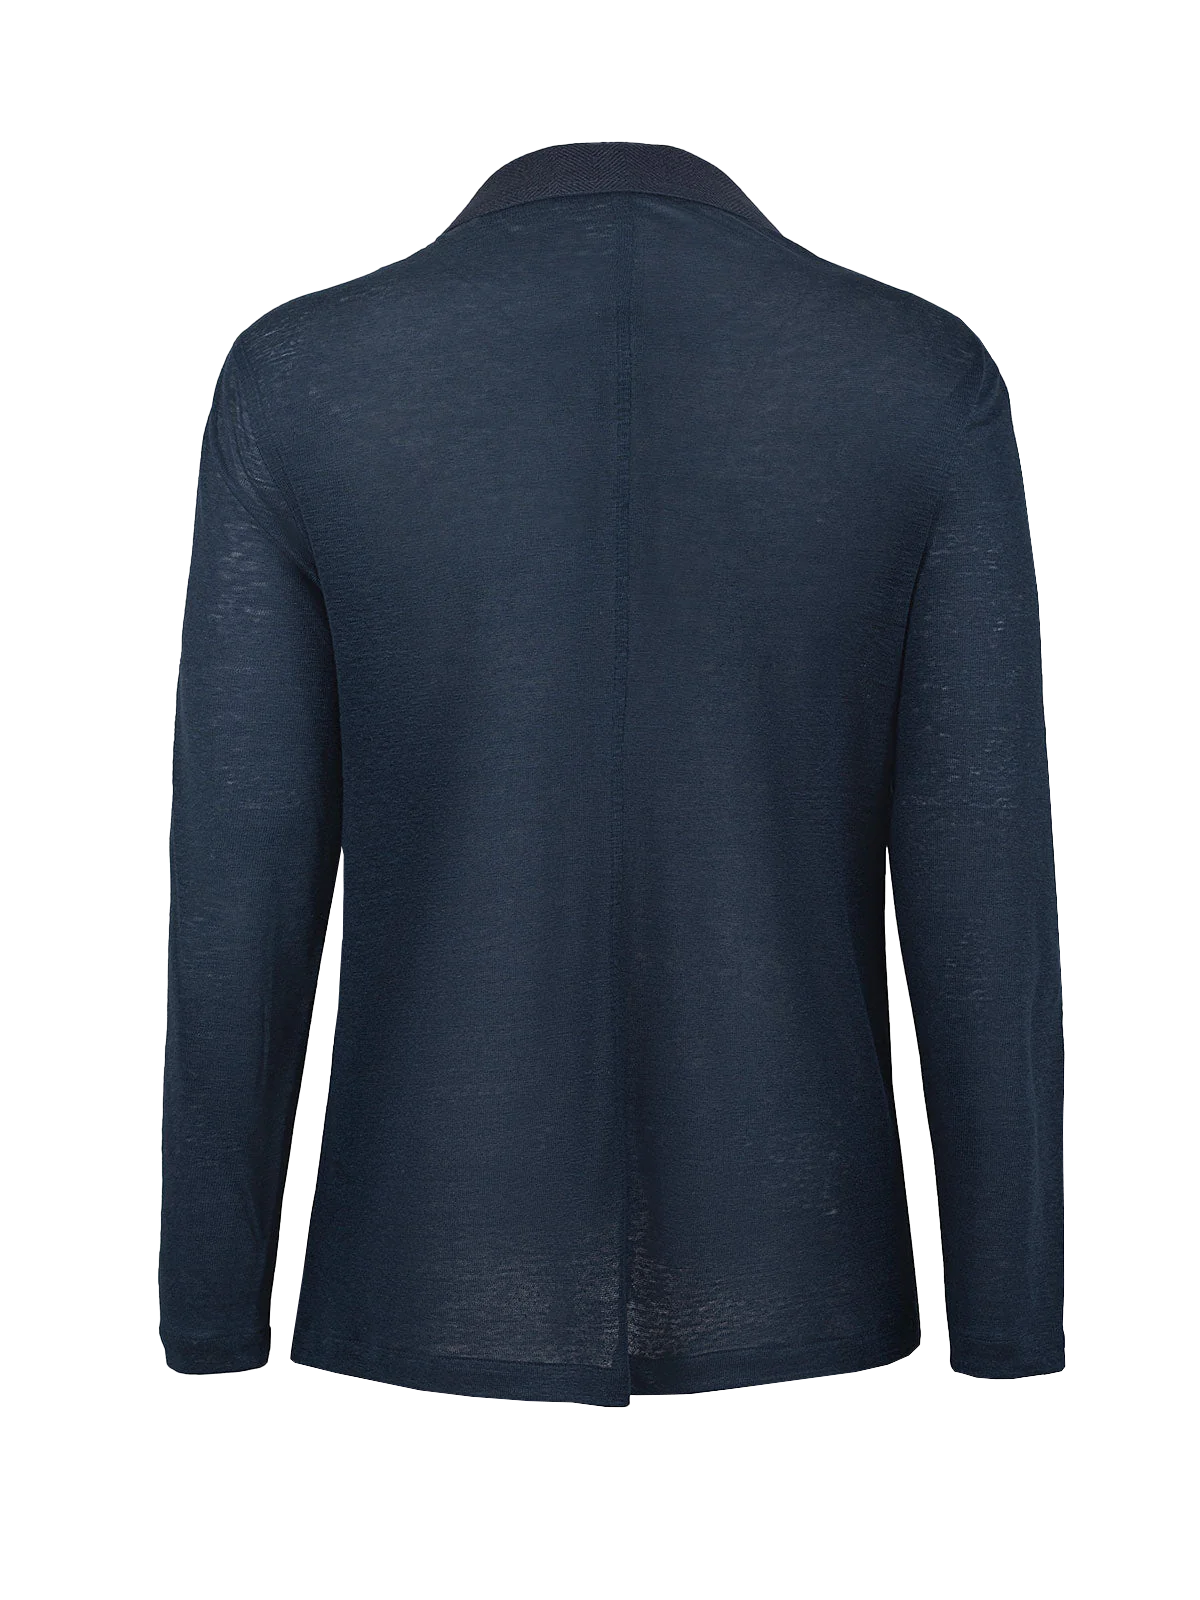 Giacca Sud Man 100% Capri blue linen jacket back 